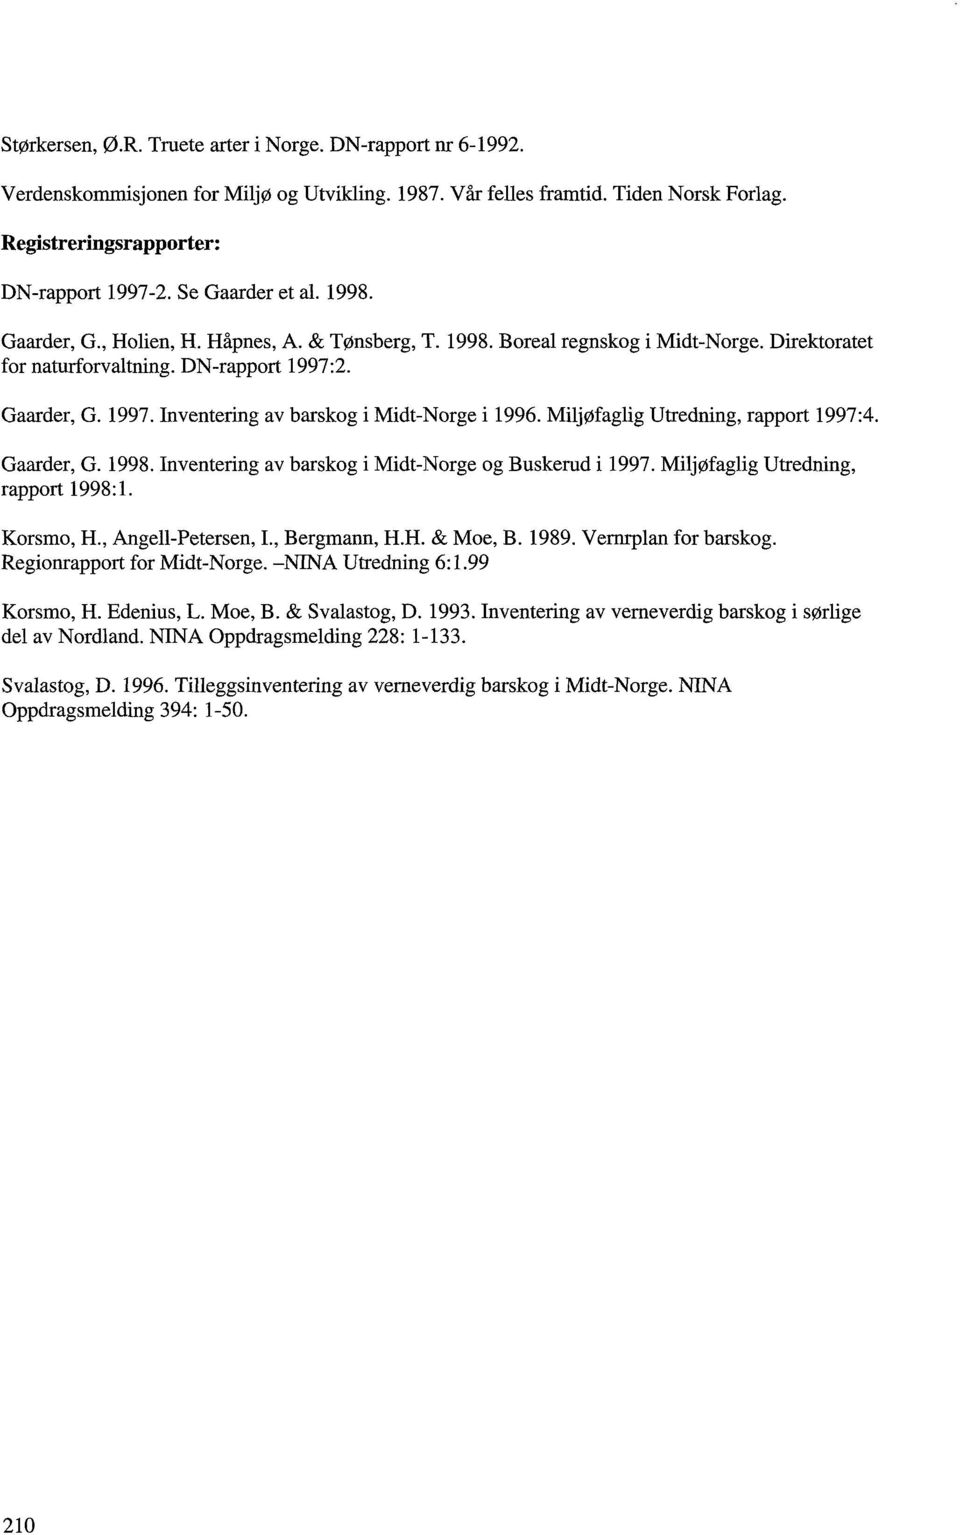 2. Gaarder, G. 1997. nventering av barskog i Midt-Norge i 1996. Miløfaglig Utredning, rapport 1997:4. Gaarder, G. 1998. nventering av barskog i Midt-Norge og Buskerud i 1997.